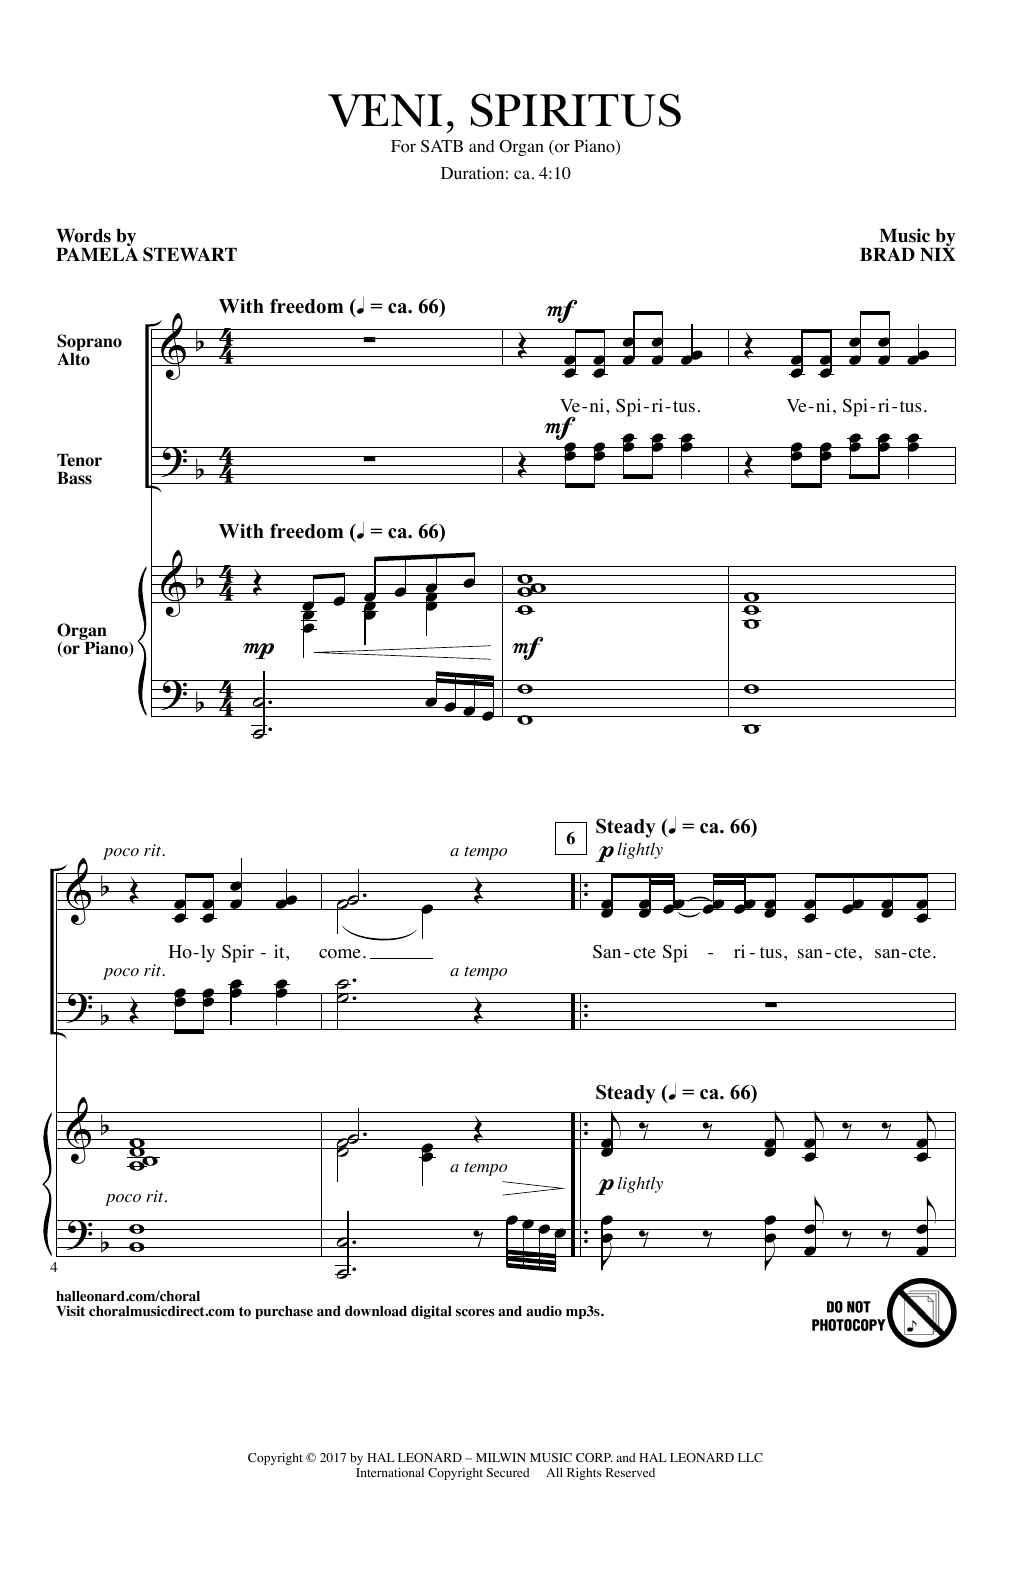 Brad Nix Veni, Spiritus Sheet Music Notes & Chords for SATB - Download or Print PDF